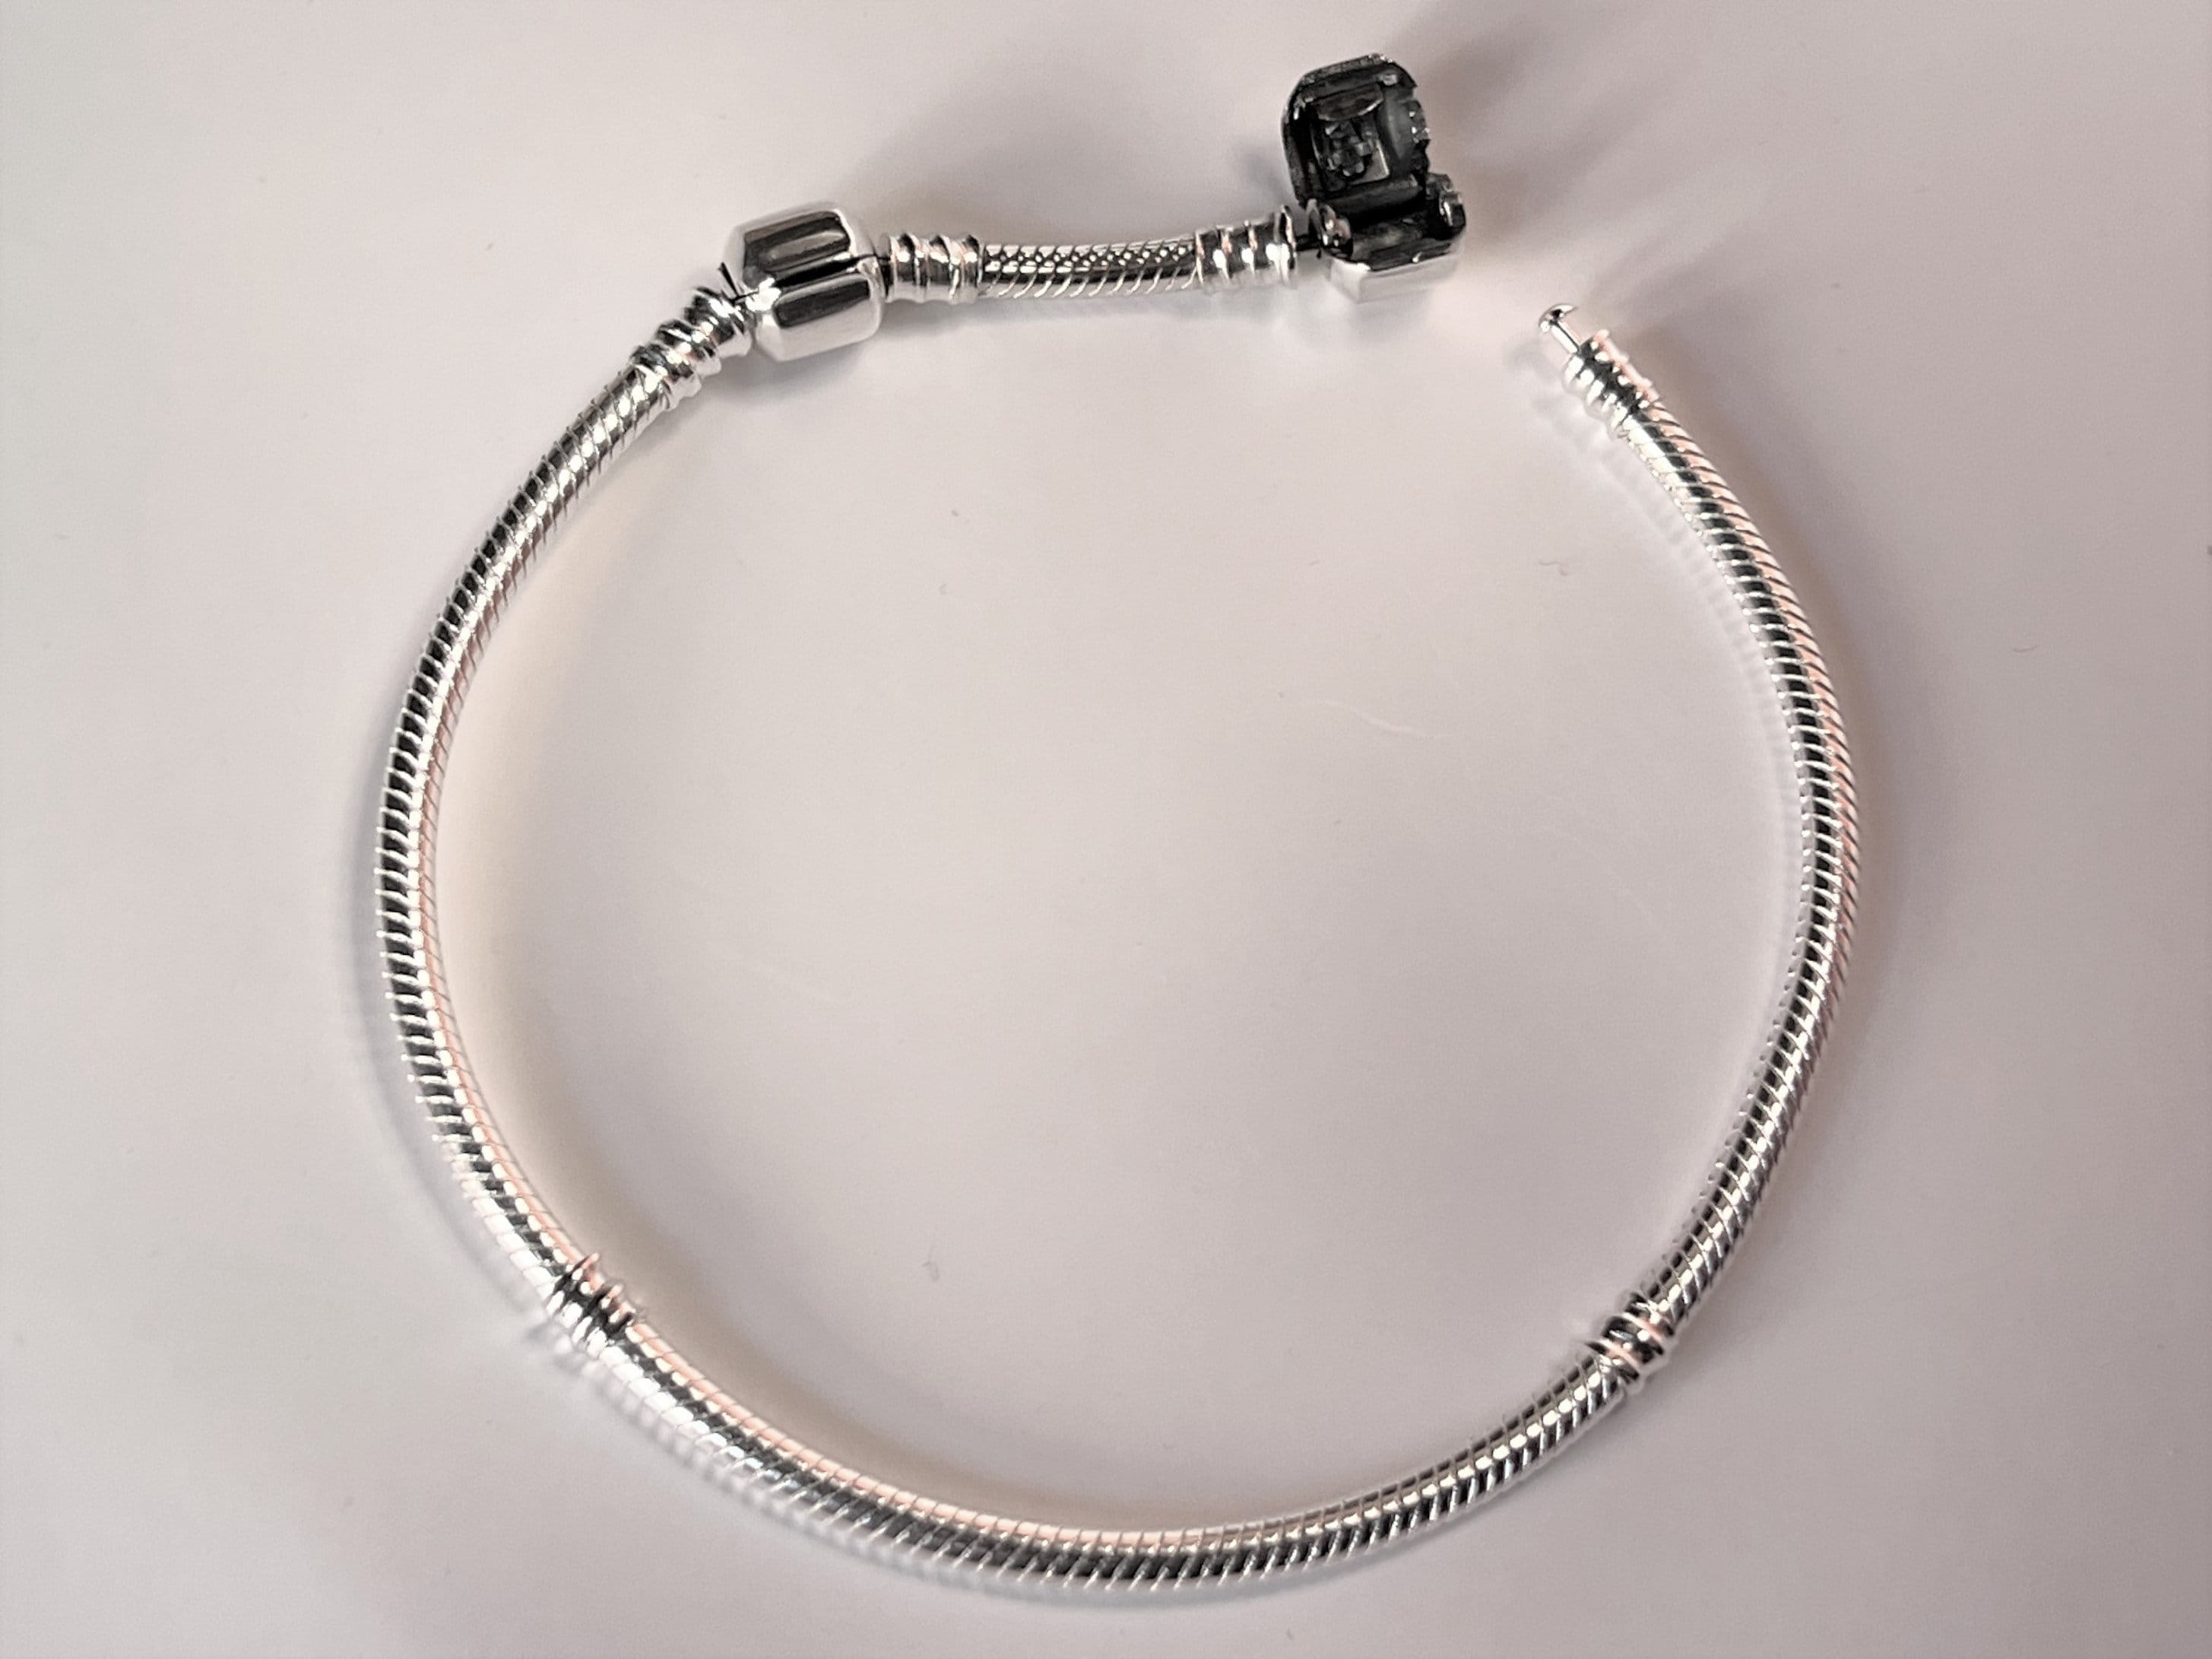 Bracelet Extender, 3 SIZES, Add Length to Any Pandora or European